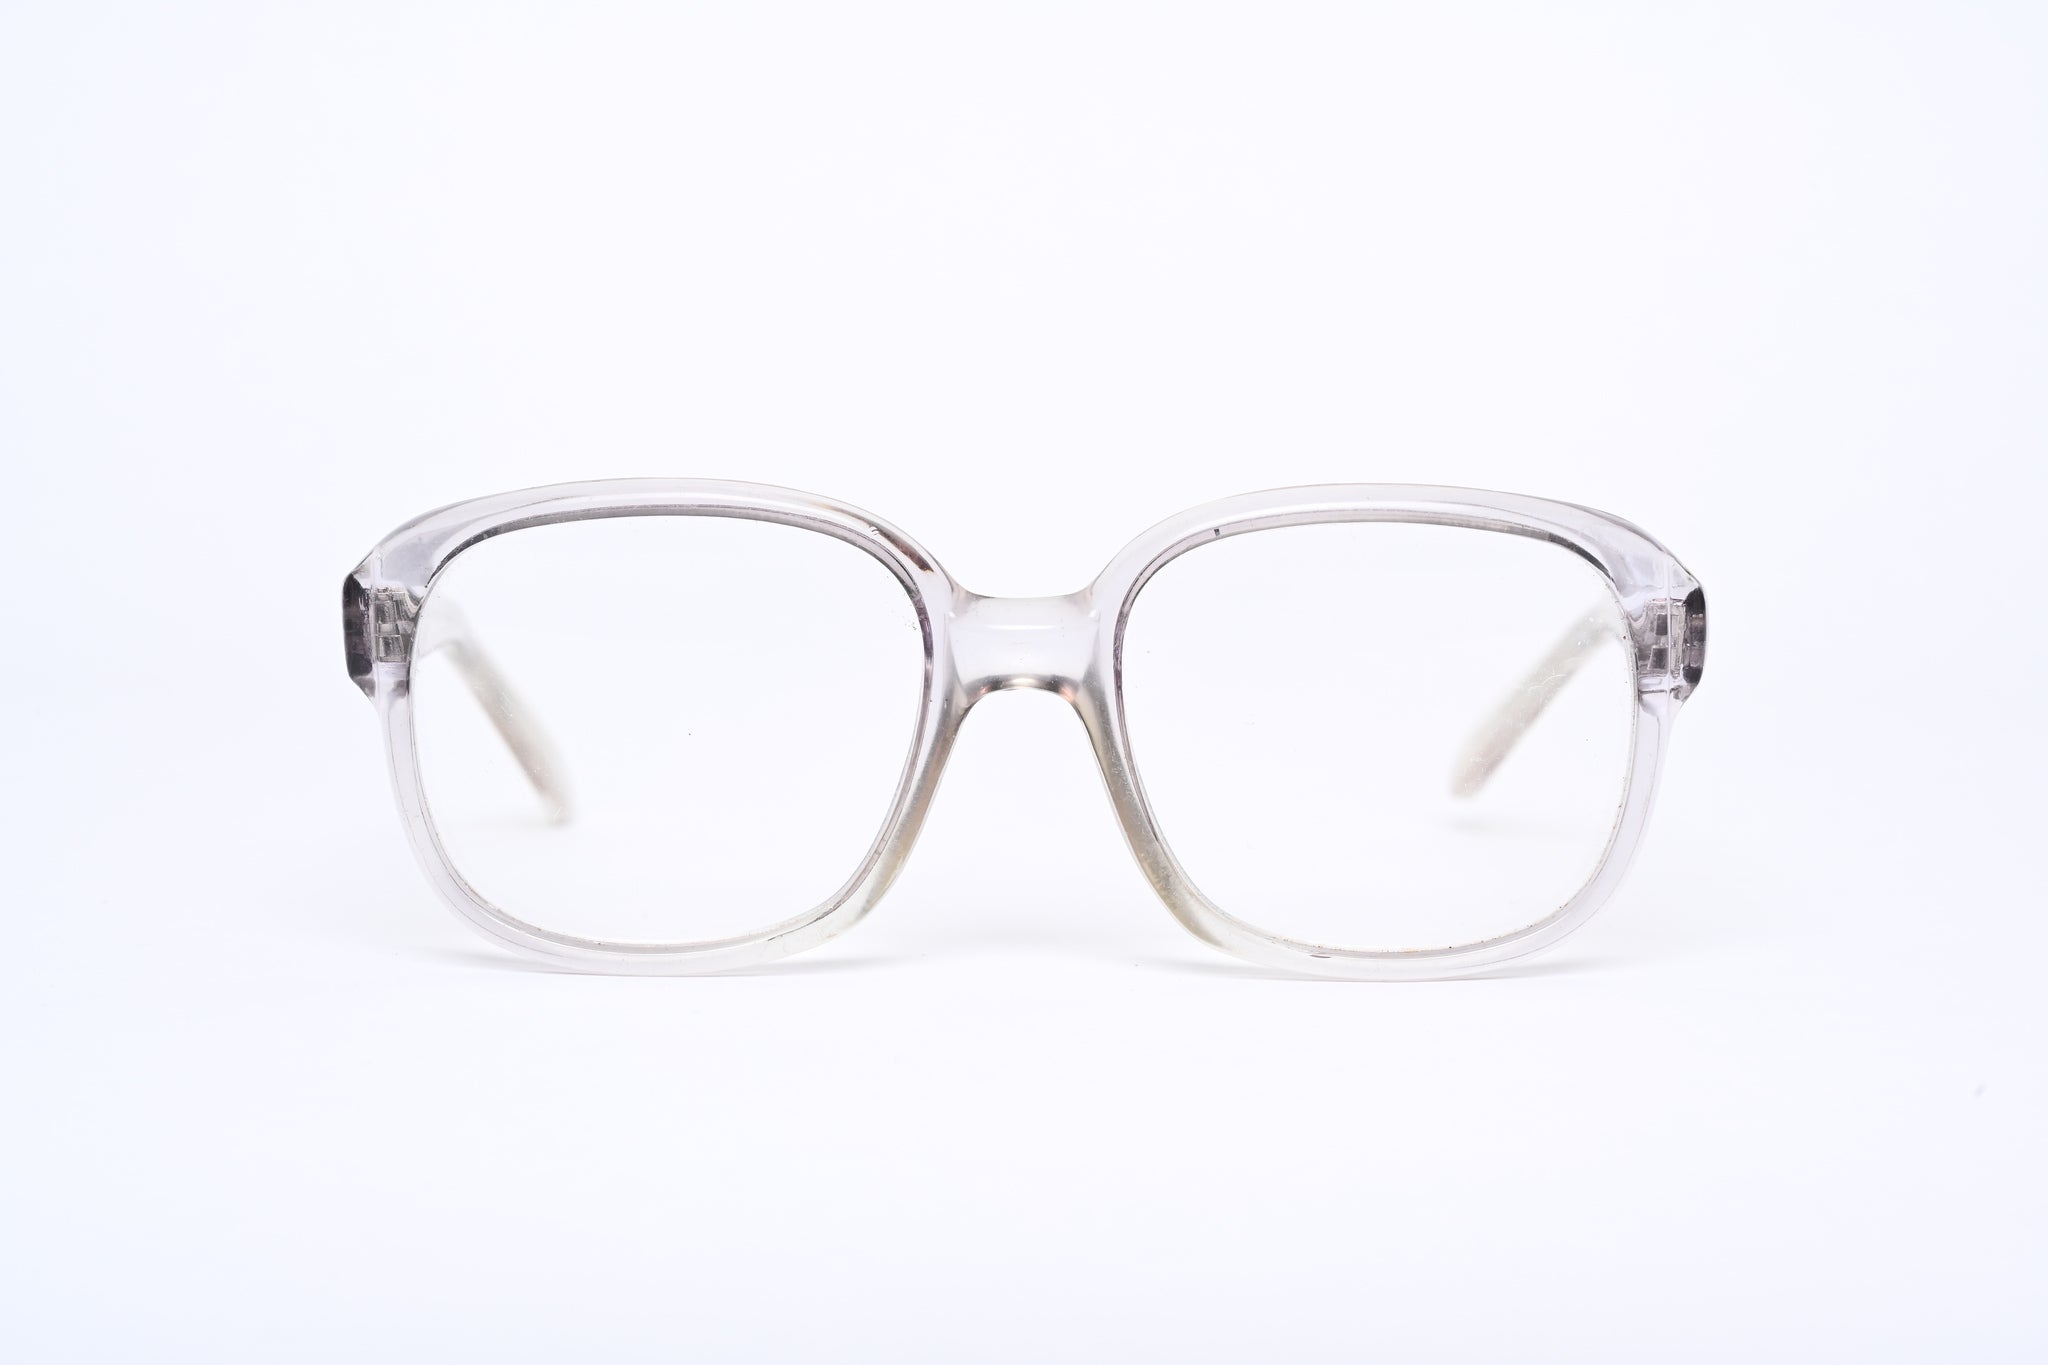  Crystal retro square glasses. Retro glasses. Cheap glasses. 